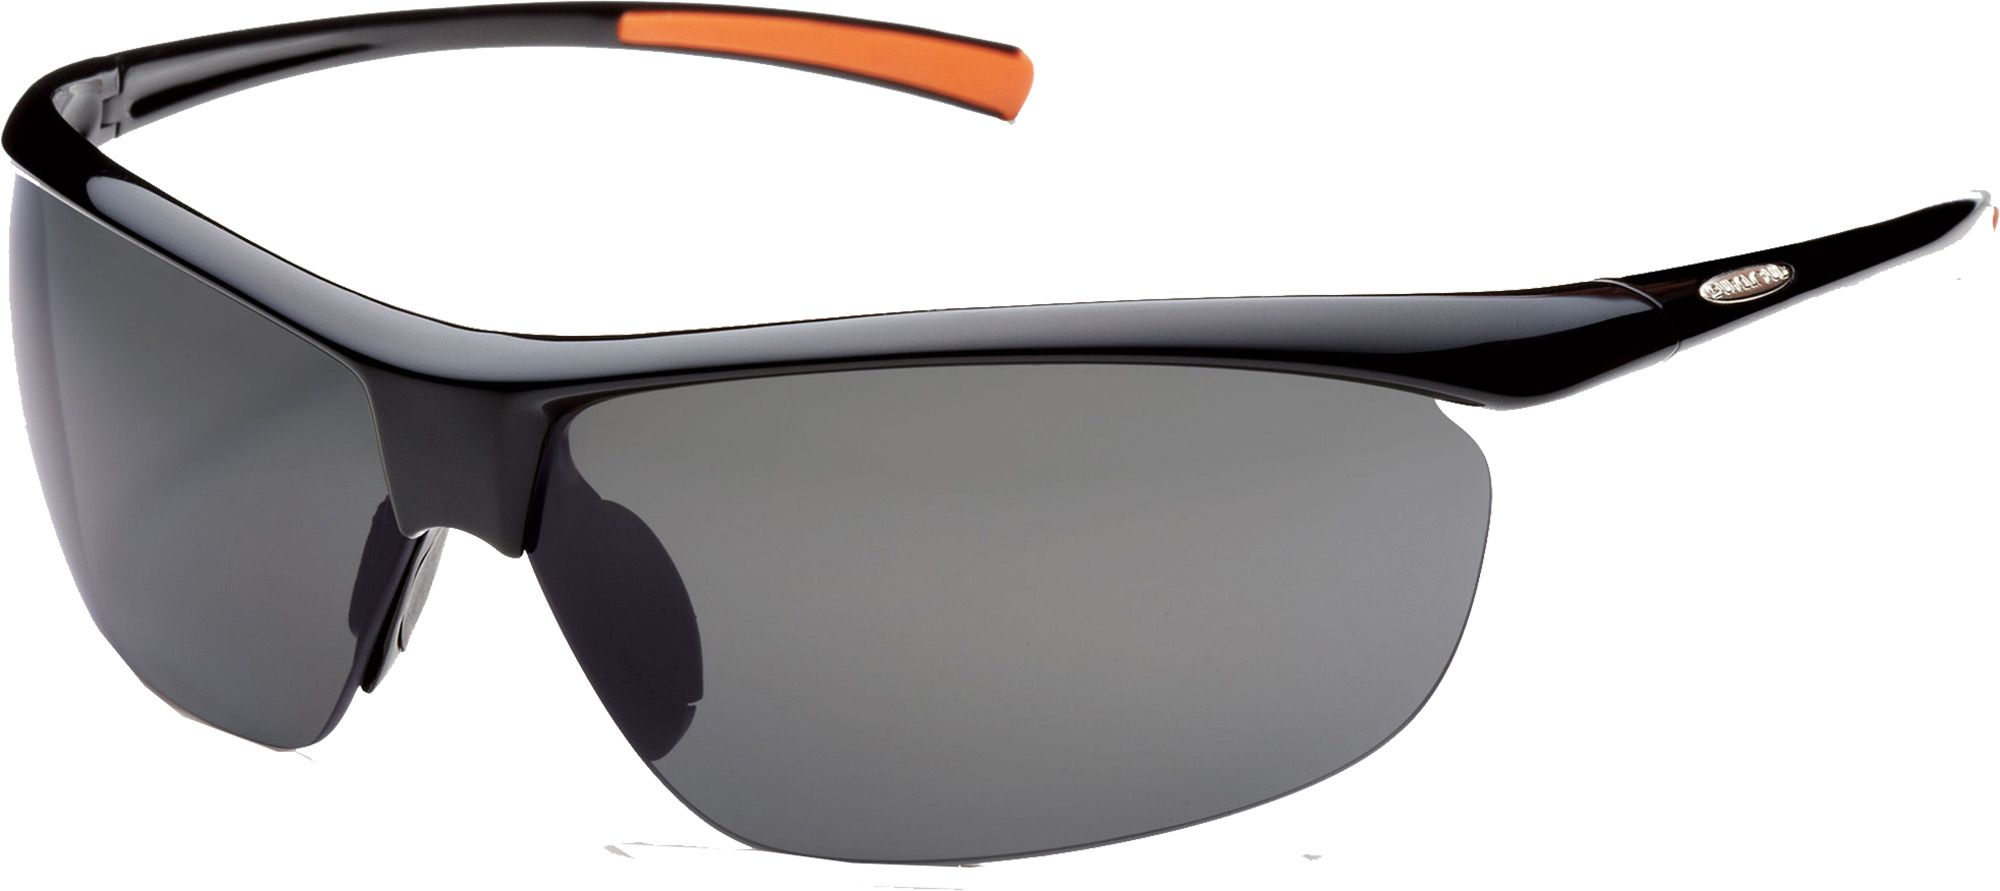 Photos - Sunglasses Suncloud Zephyr Polarized , Men's, Black/Grey Polarized | Father